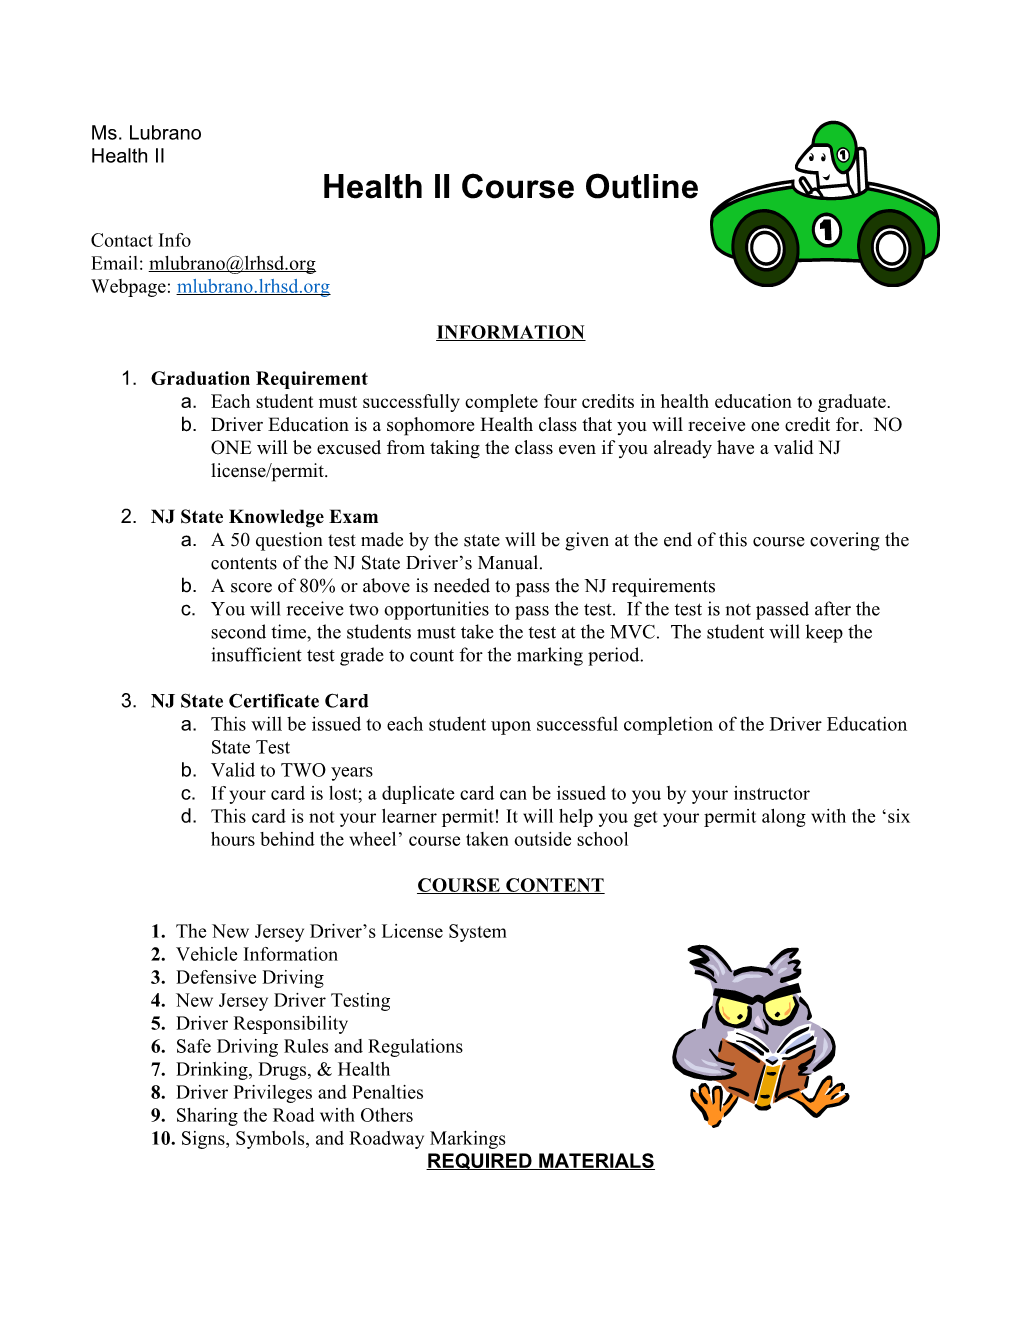 Health II Course Outline